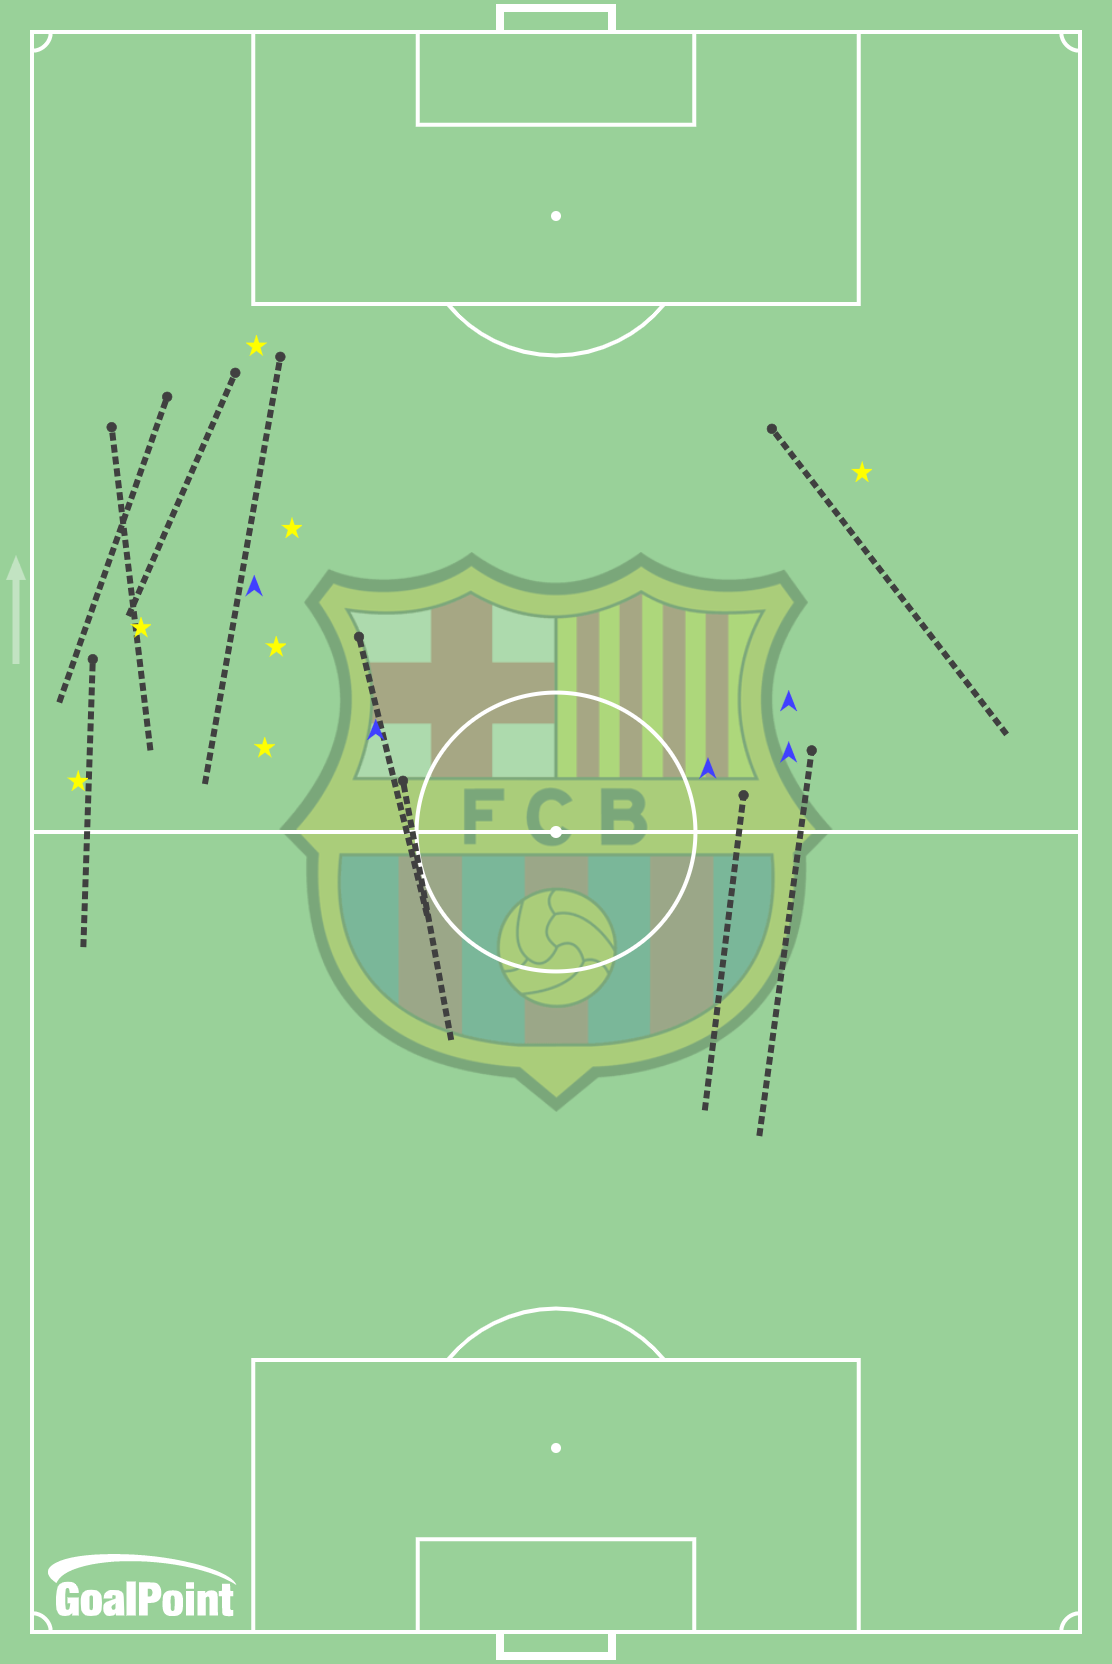 GoalPoint-Barcelona-Getafe-LaLiga-Specials-202122